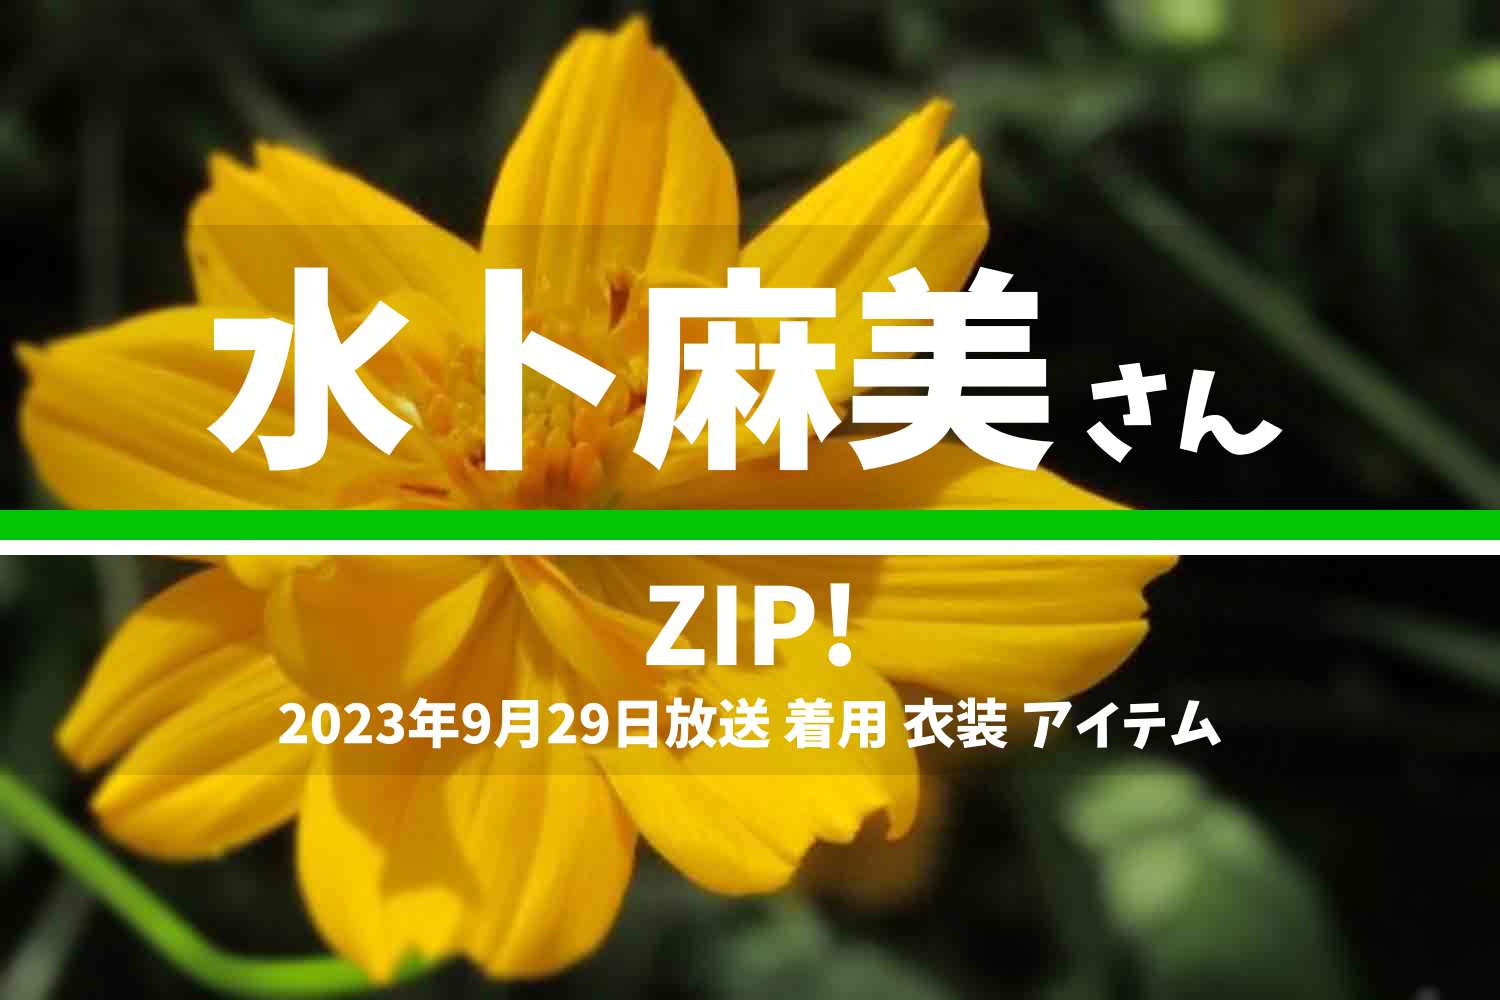 ZIP! 水卜麻美さん 番組 衣装 2023年9月29日放送